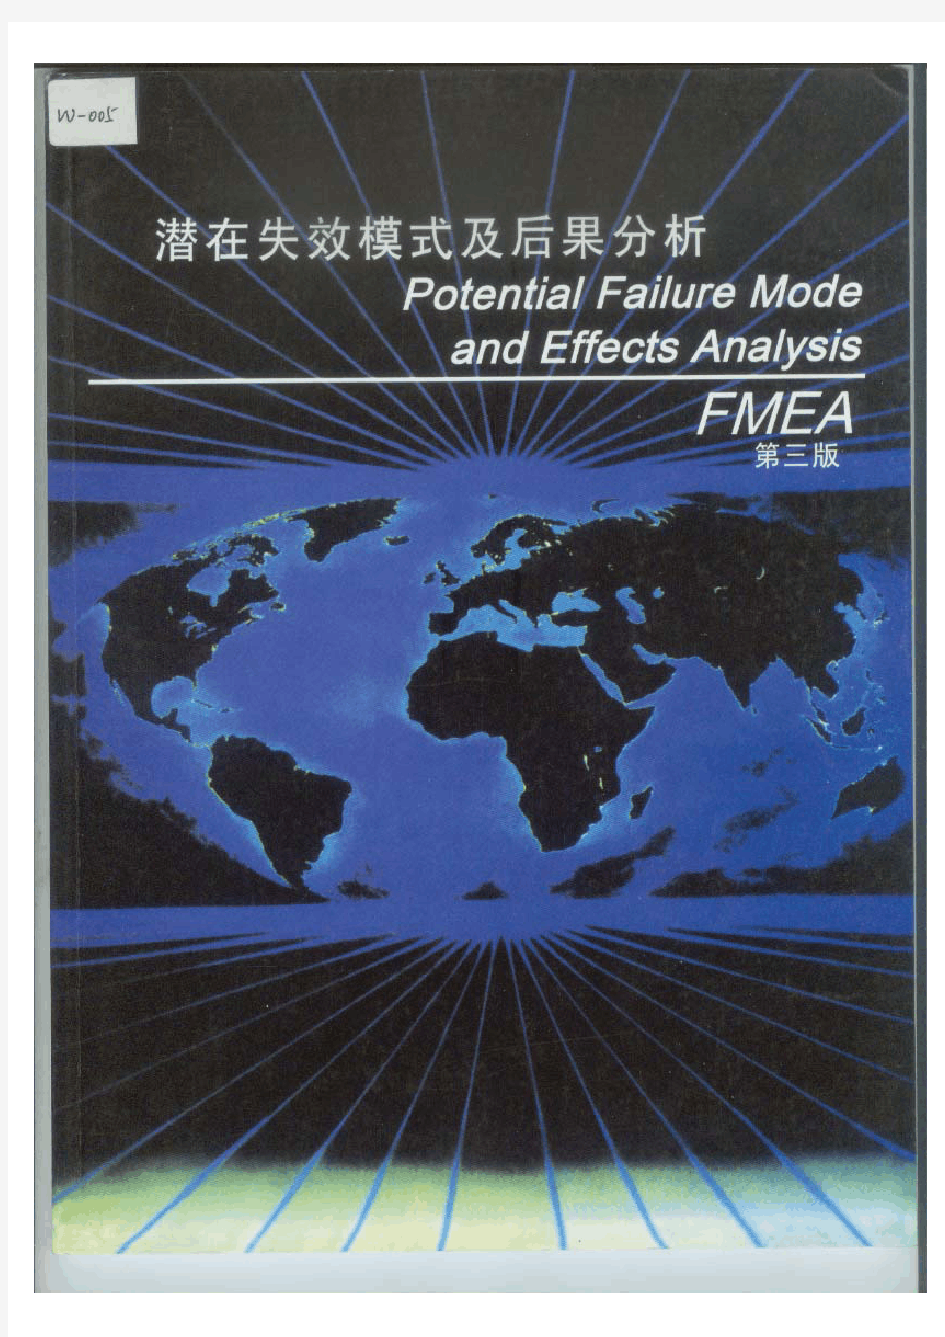 TS-16949资料-在失效模式及后果分析(FMEA第三版)-淘道网分享-71